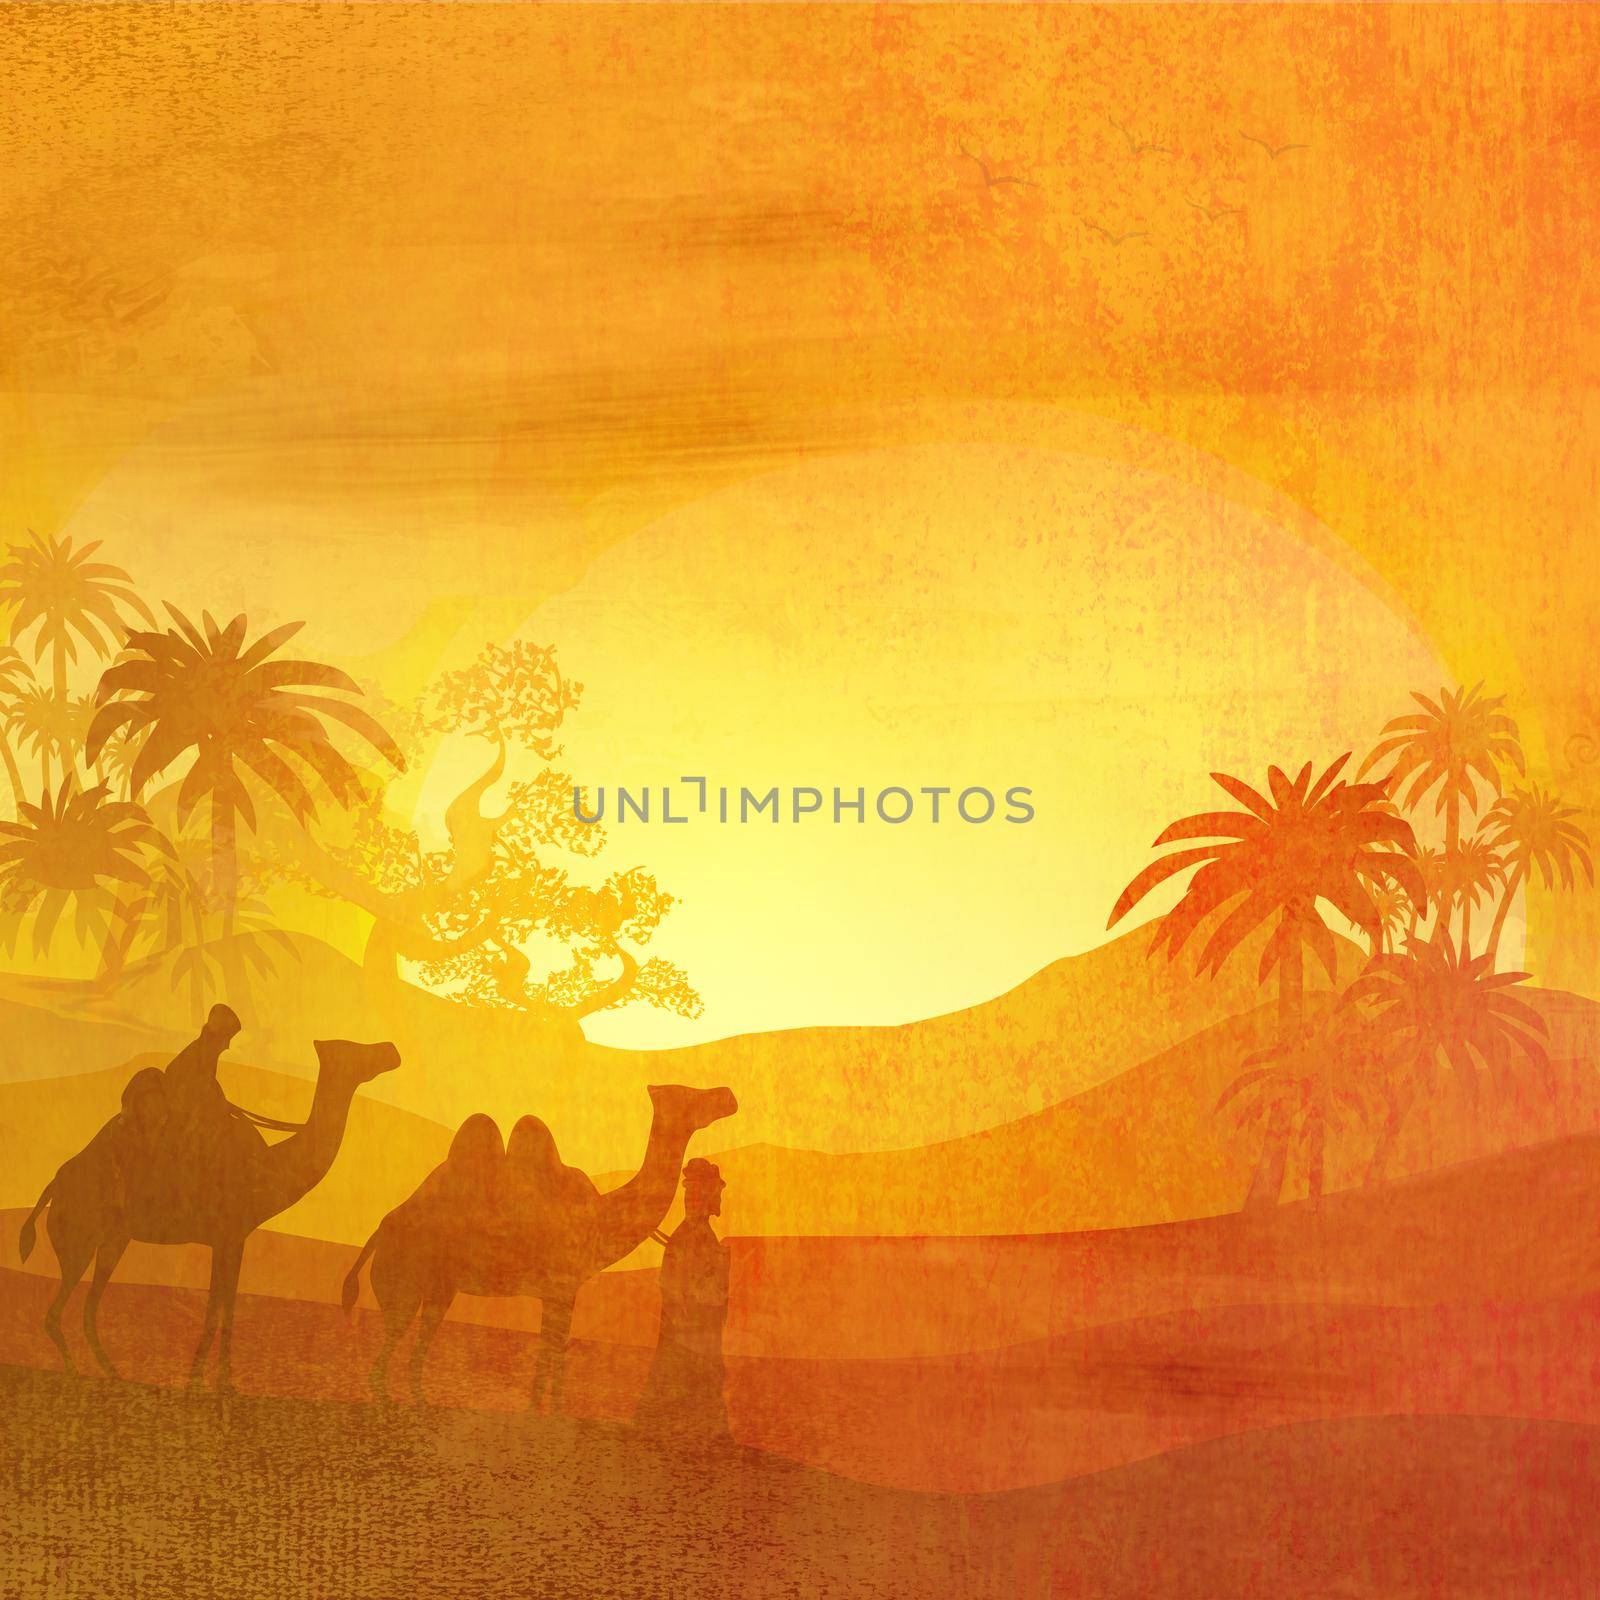 Bedouin camel caravan in wild africa landscape - artistic grunge illustration by JackyBrown